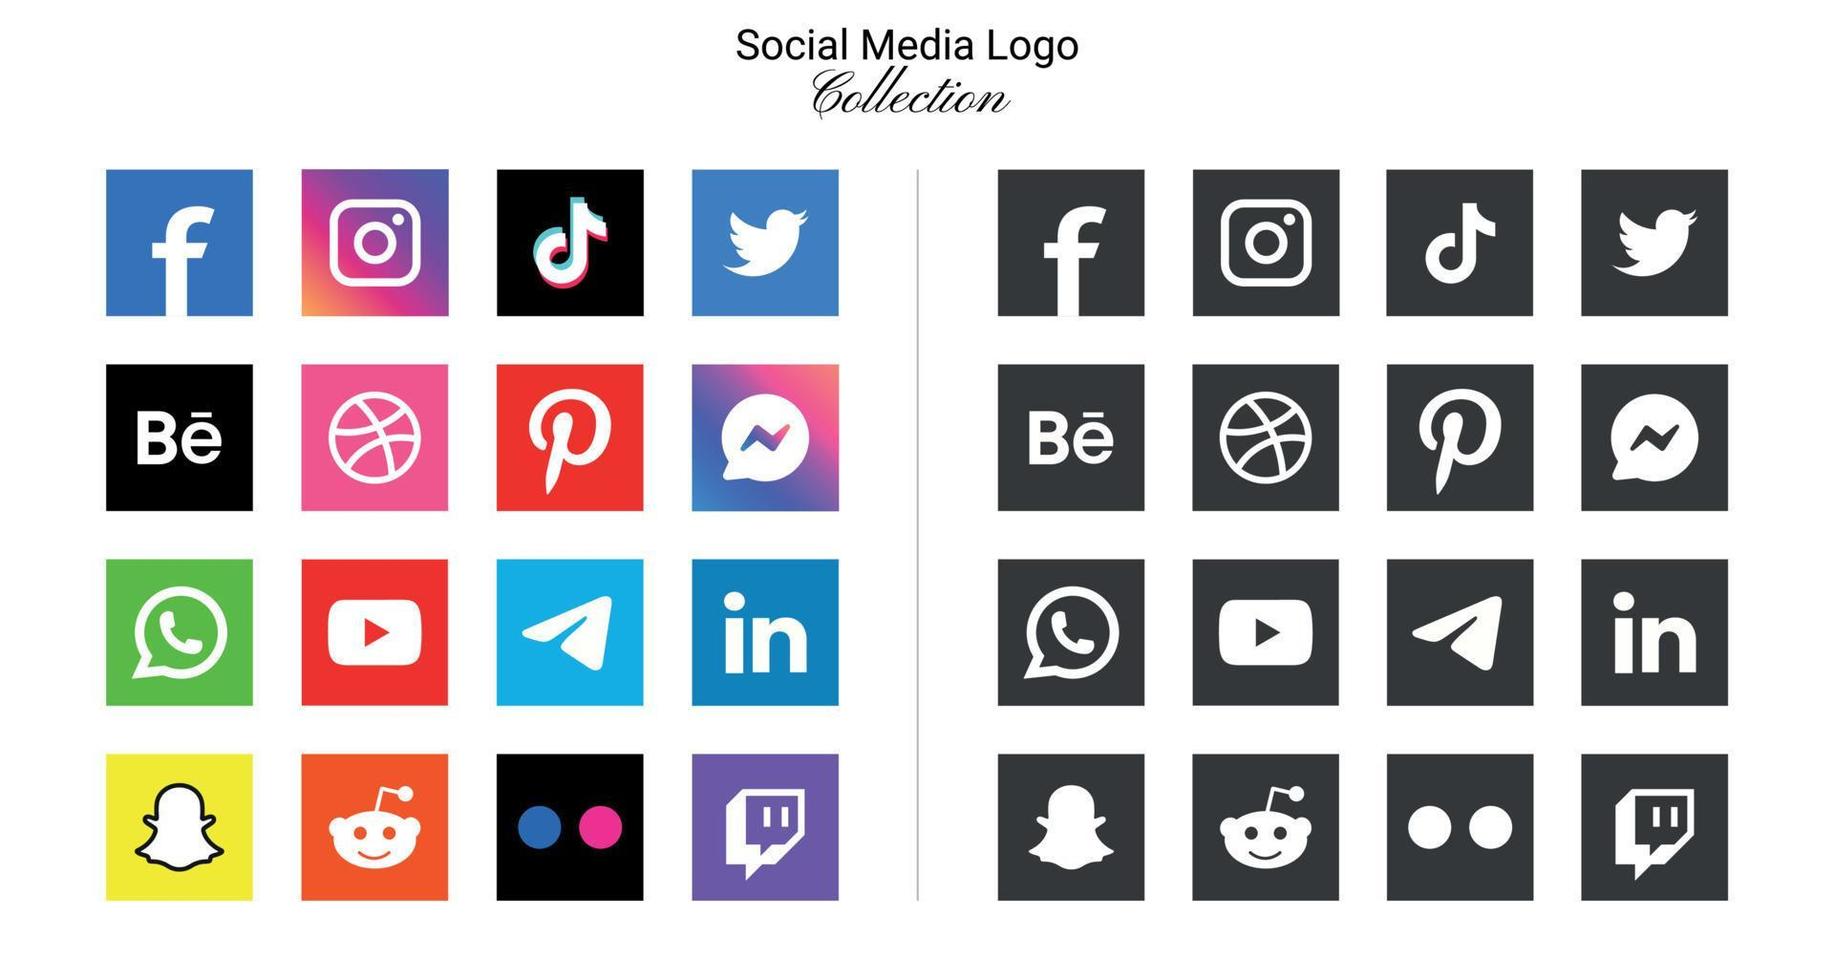 Popular social network logo icons facebook instagram youtube pinterest and etc logo icons, social media icons vector